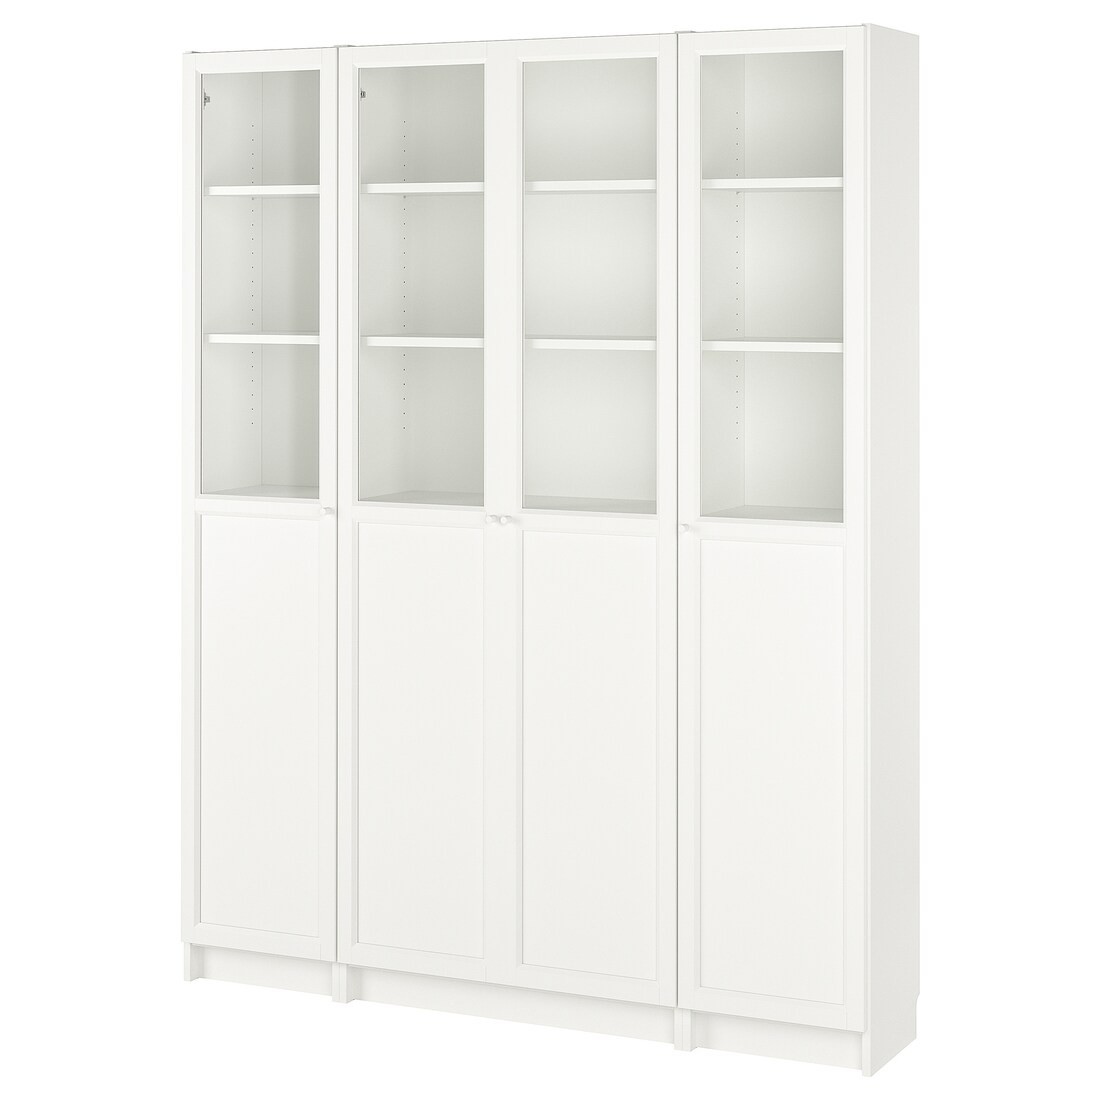 IKEA BILLY БИЛЛИ / OXBERG ОКСБЕРГ Комбинация стеллажей глухие / стеклянные двери, белый, 160 х 202 см 39483605 394.836.05